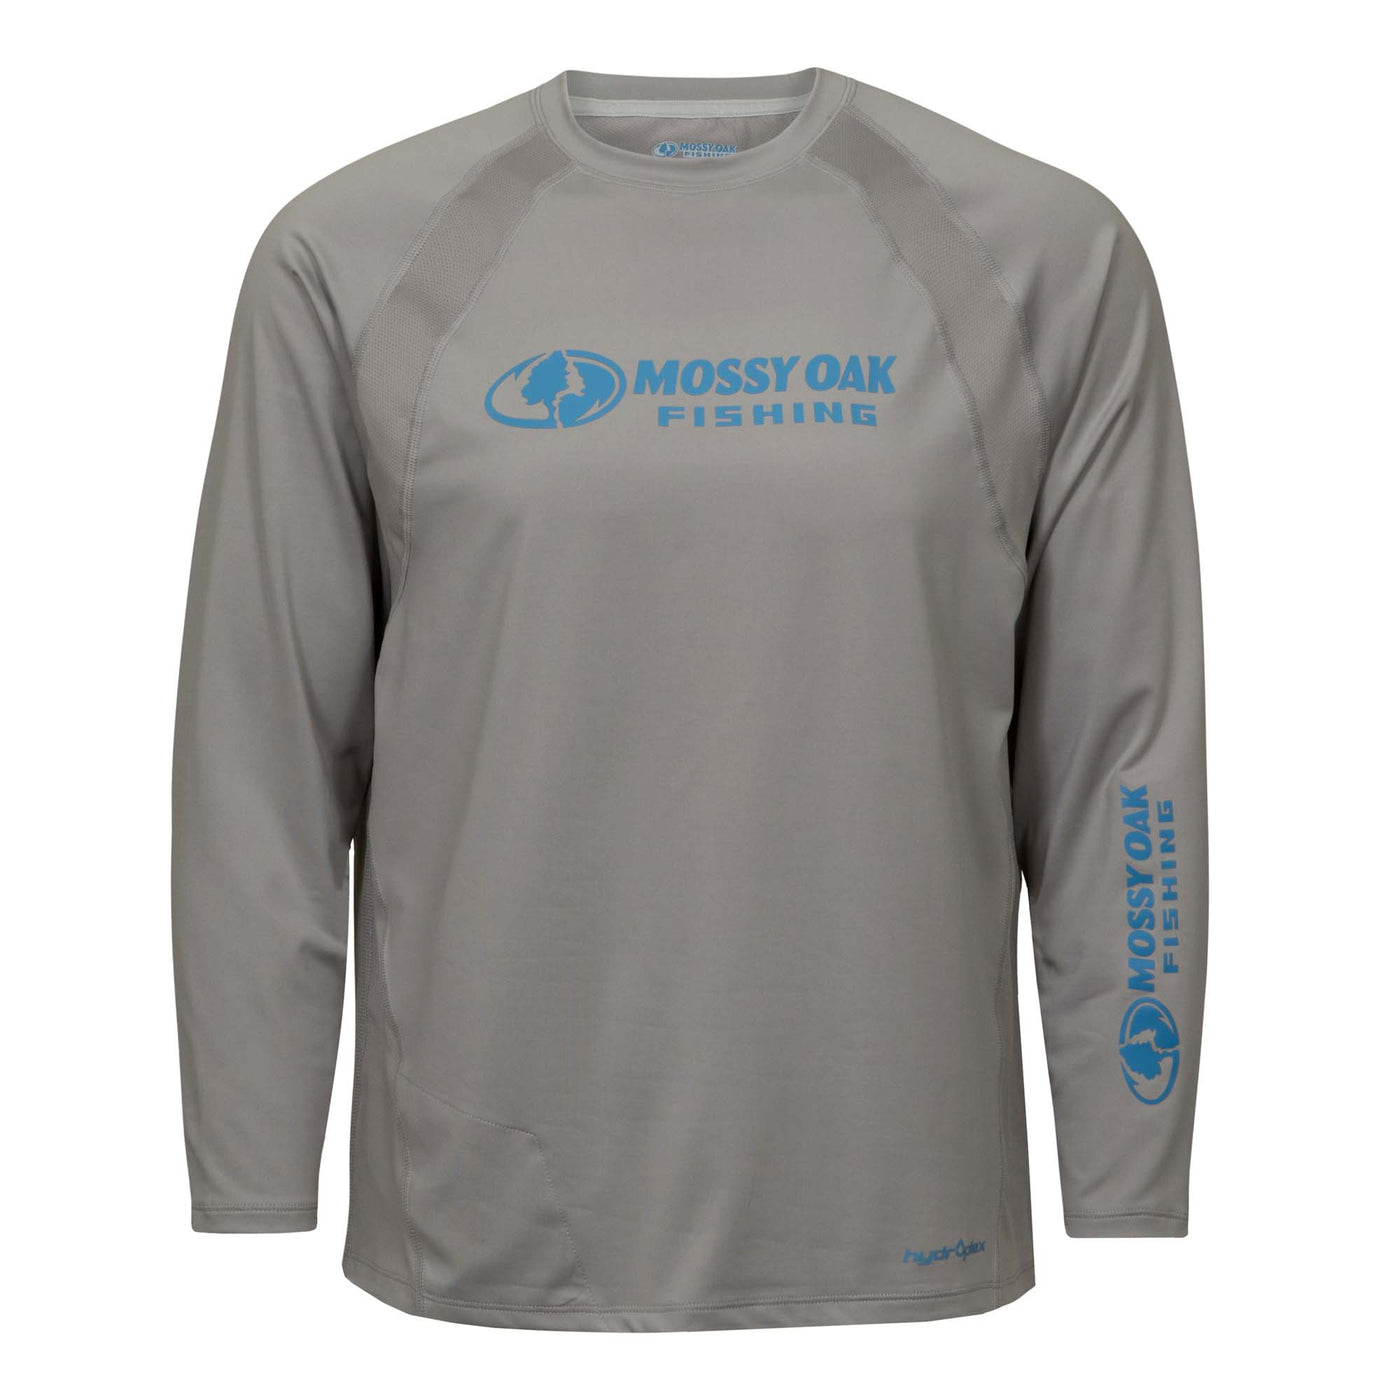 Mossy Oak Men's Standard Fishing Shirts Long Sleeve with UPF 40+